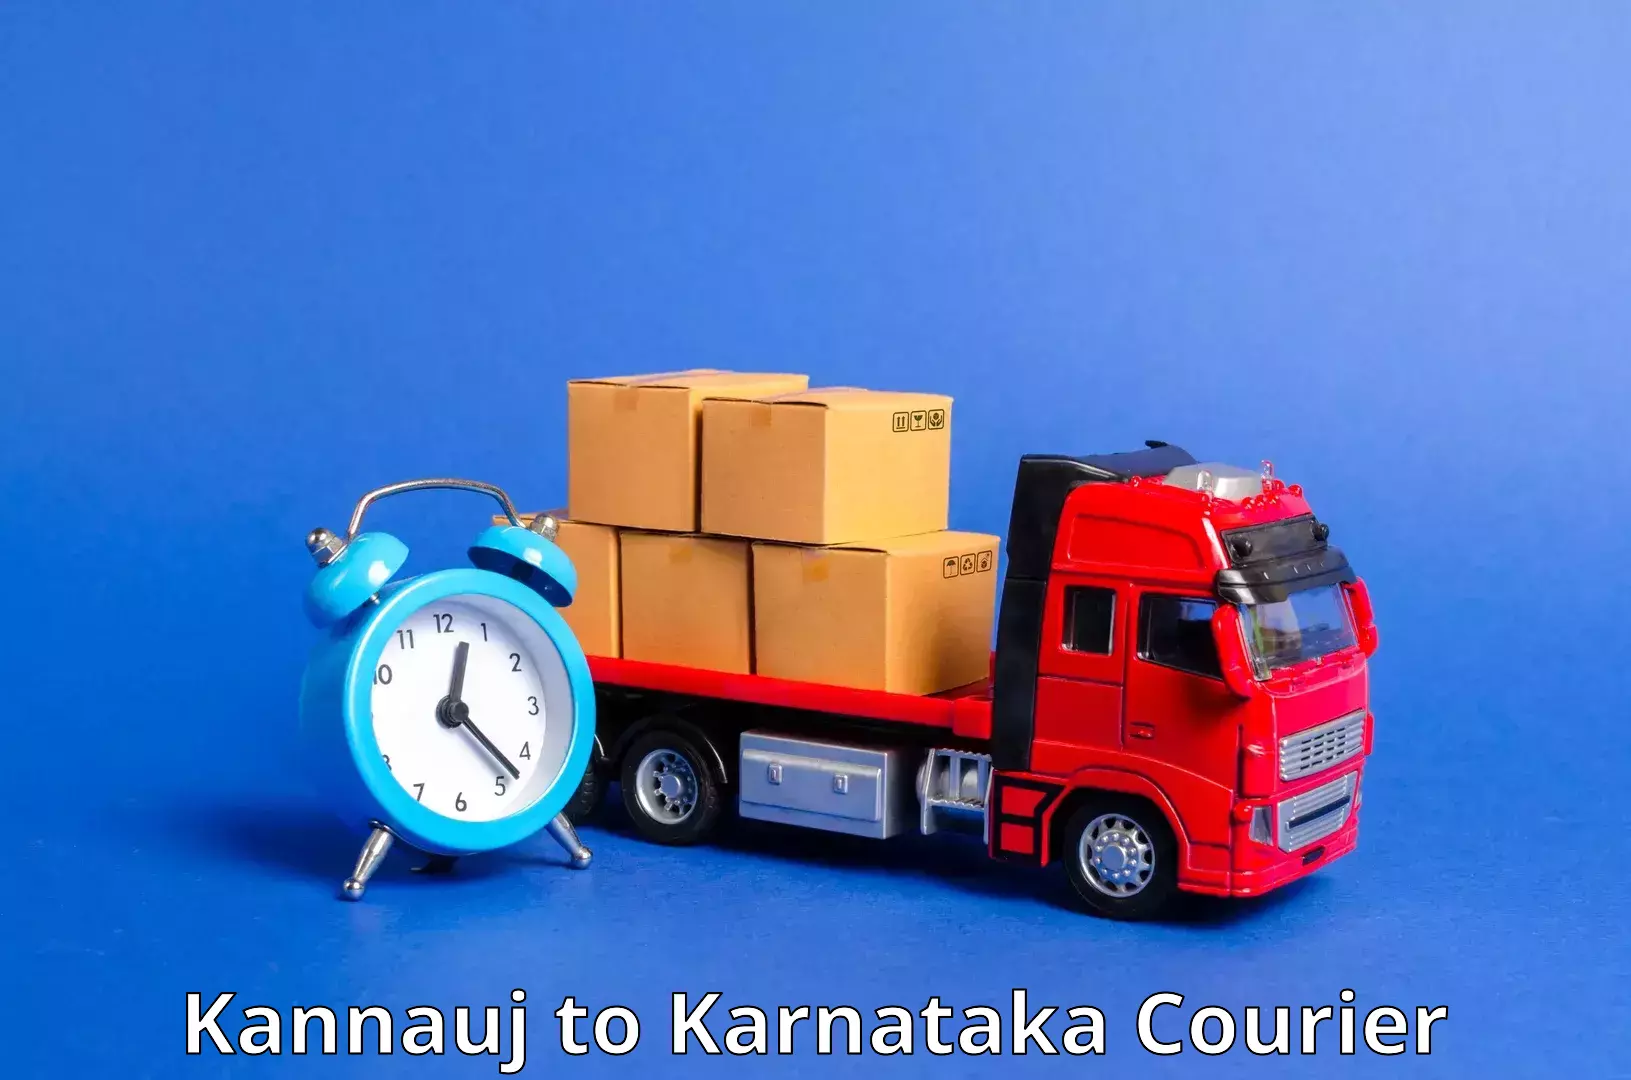 Speedy delivery service Kannauj to Manipal